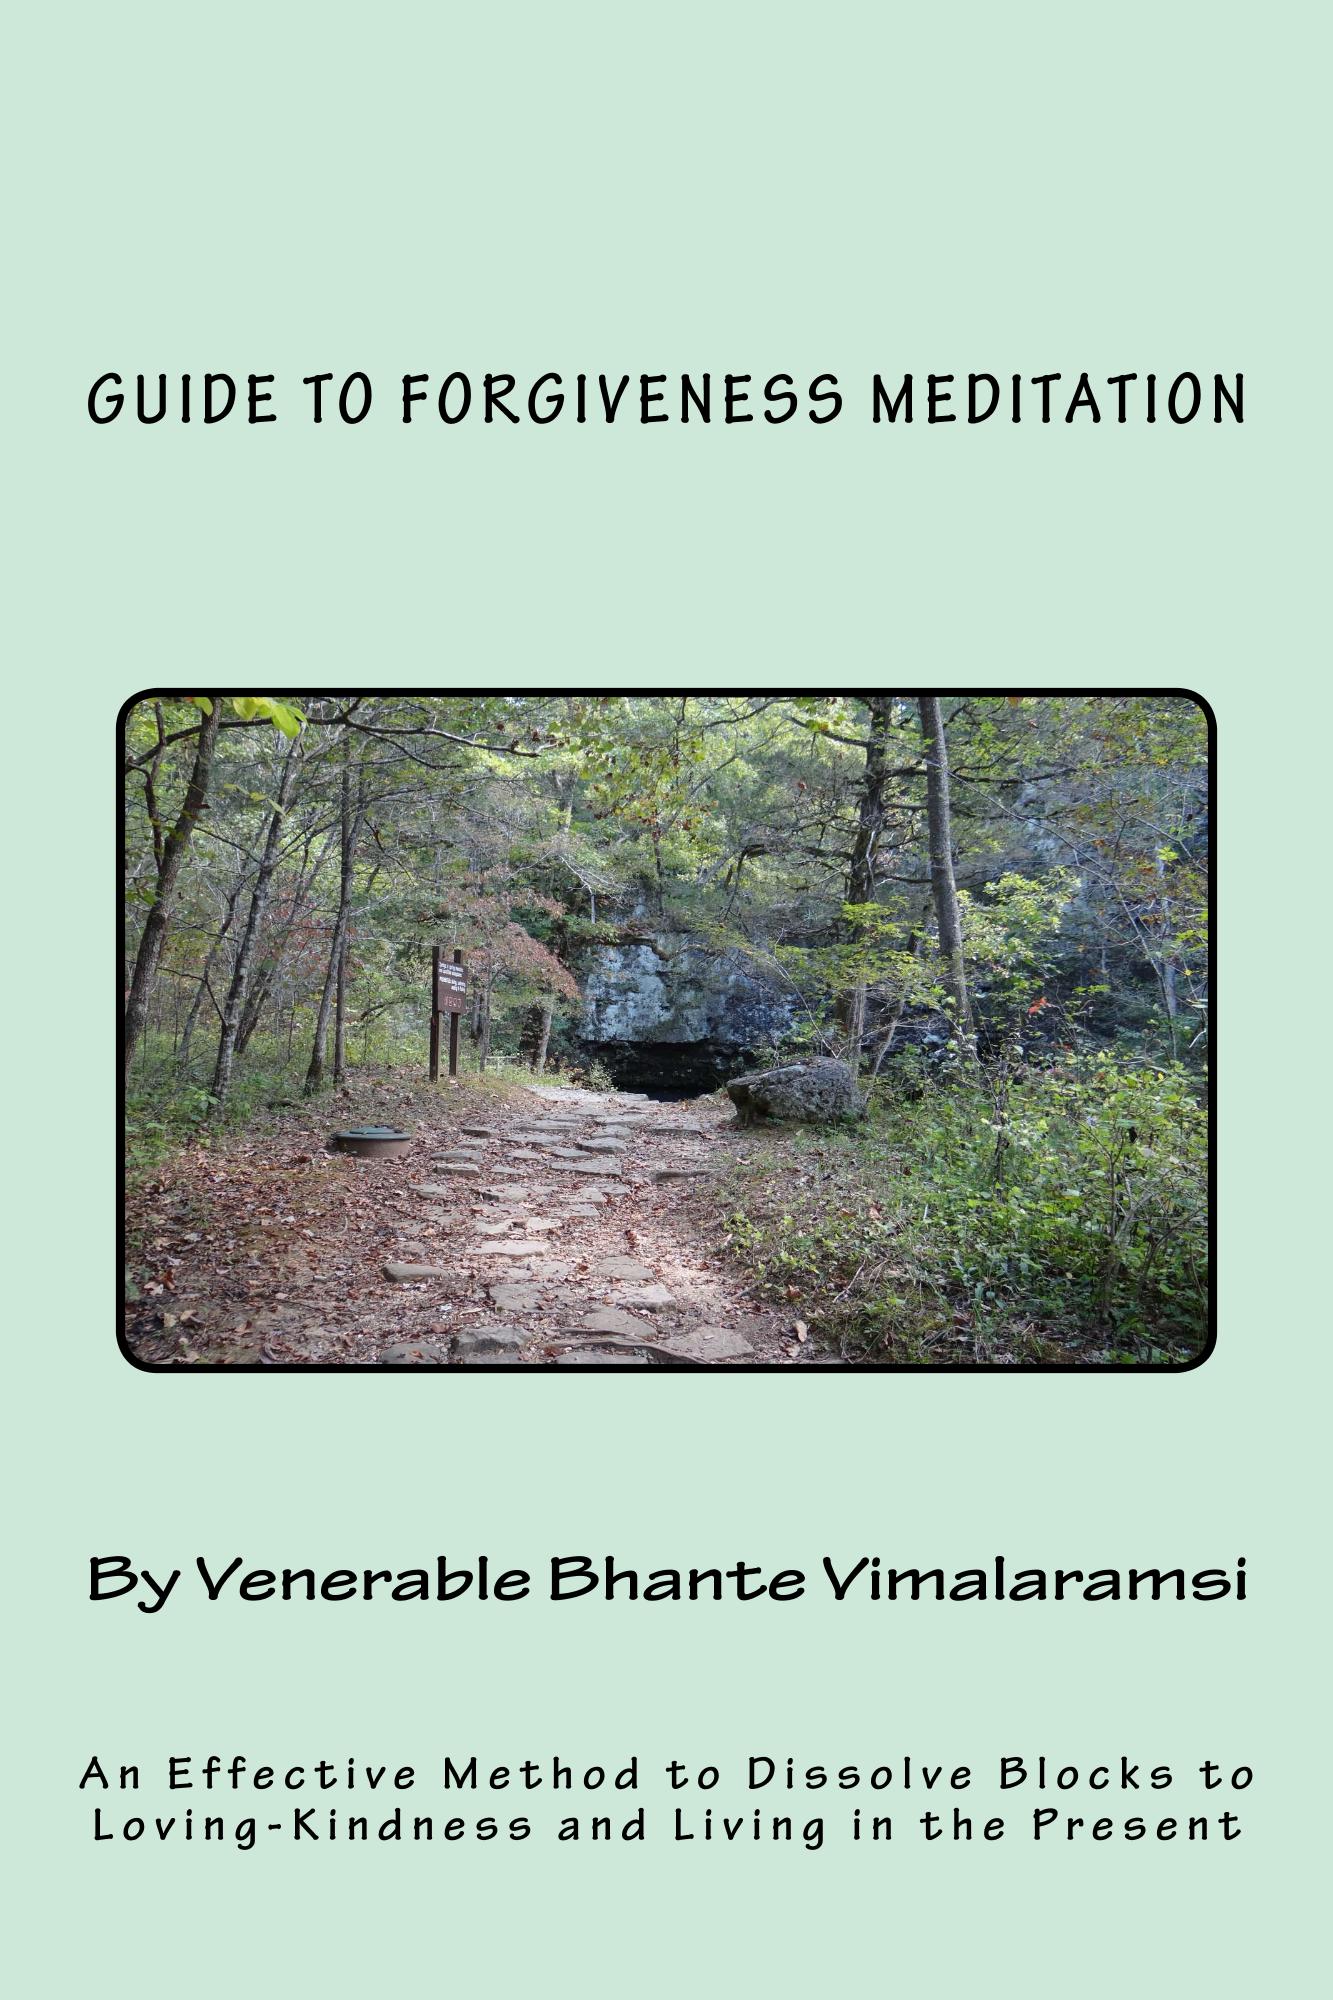 A Guide to Forgiveness Meditation by Bhante Vimalaramsi